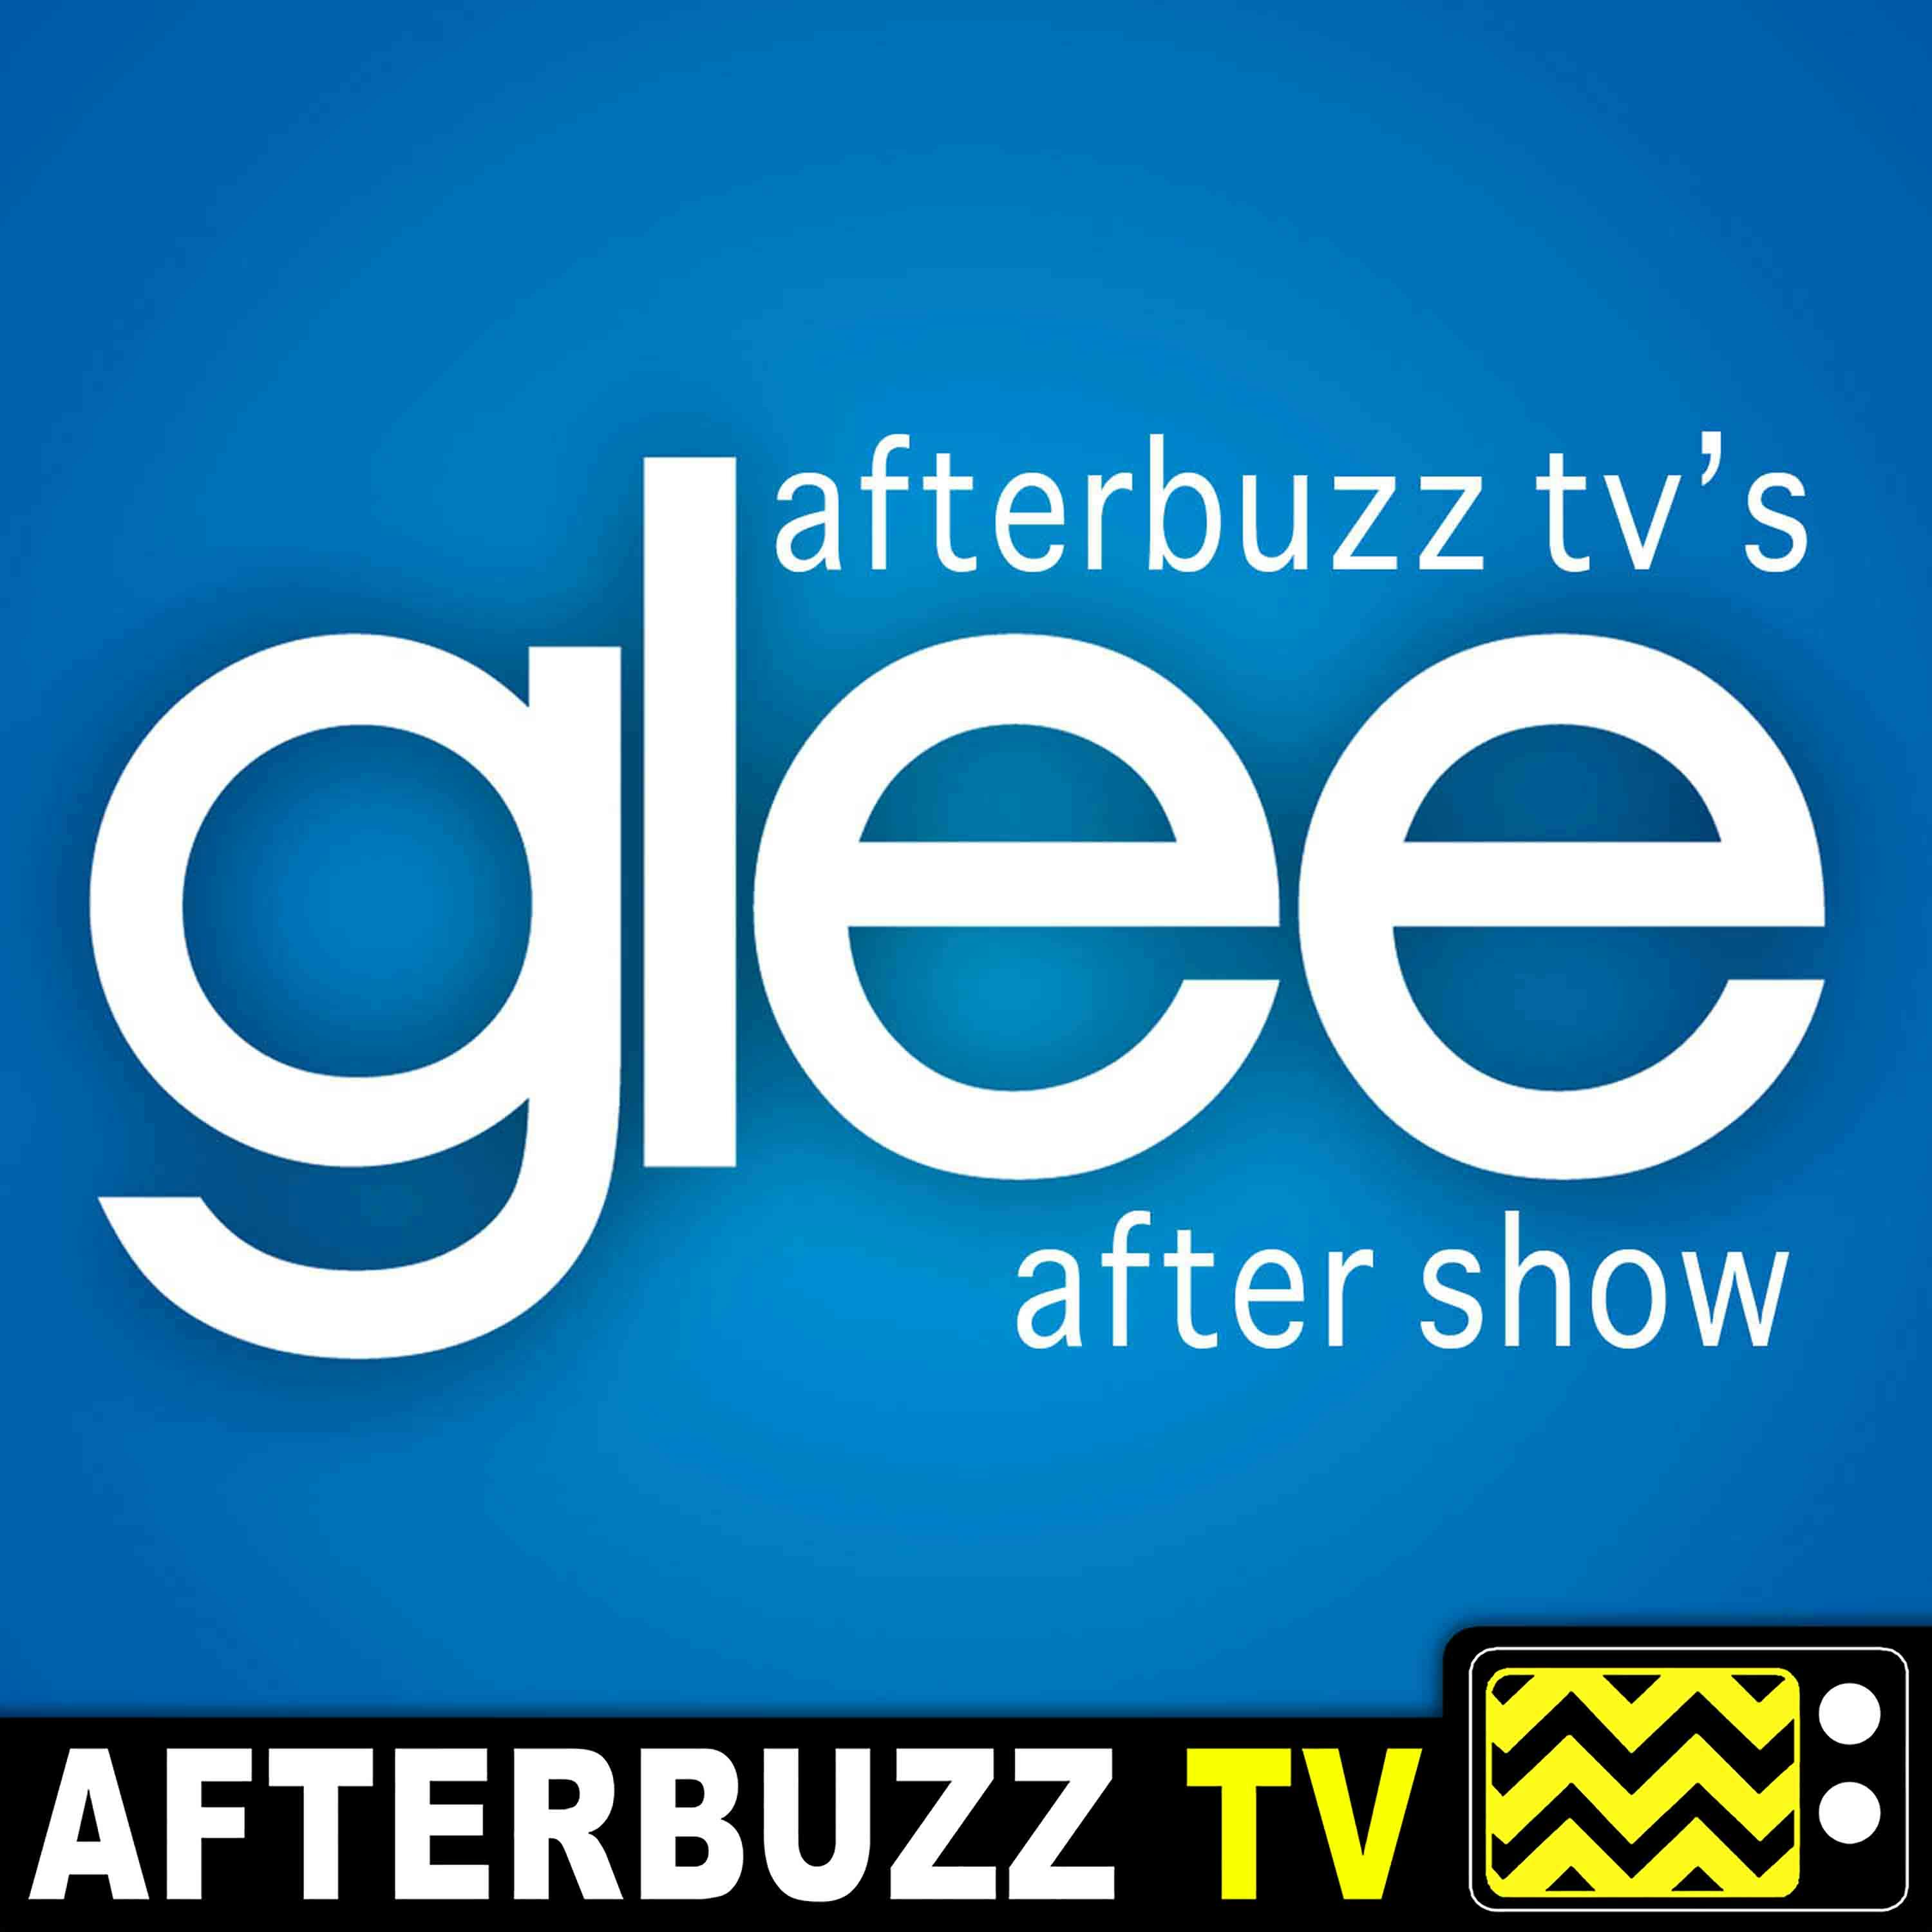 Glee S:6 | The Hurt Locker Pt. 1 E:4 | AfterBuzz TV AfterShow